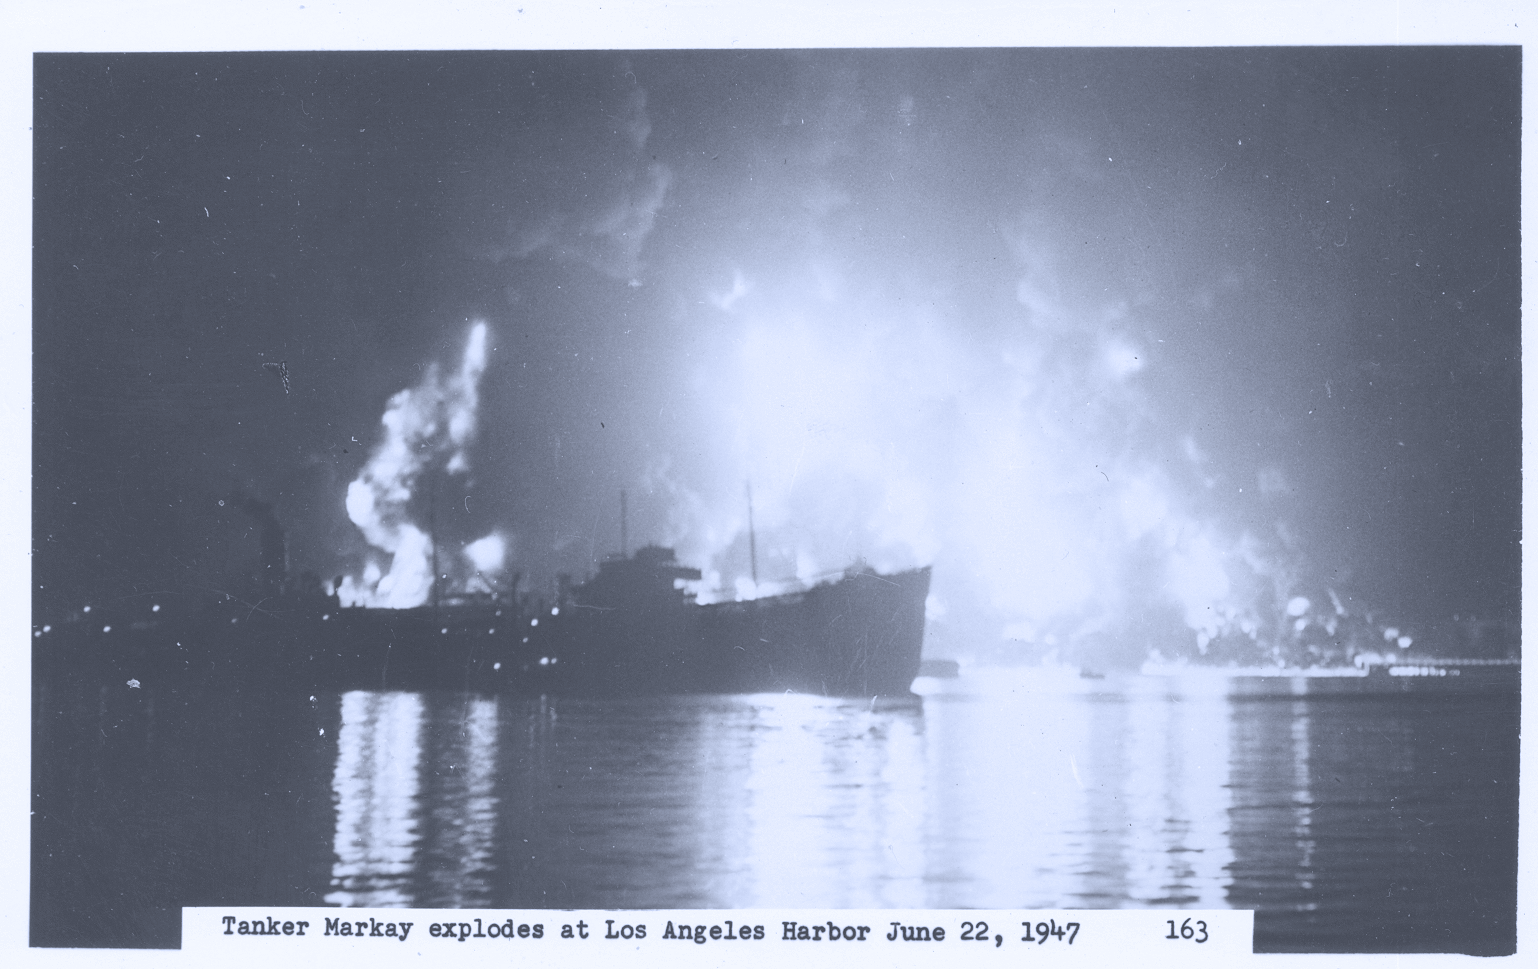 Tanker Markayexplodes at Los Angeles Harbor June 22, 1947